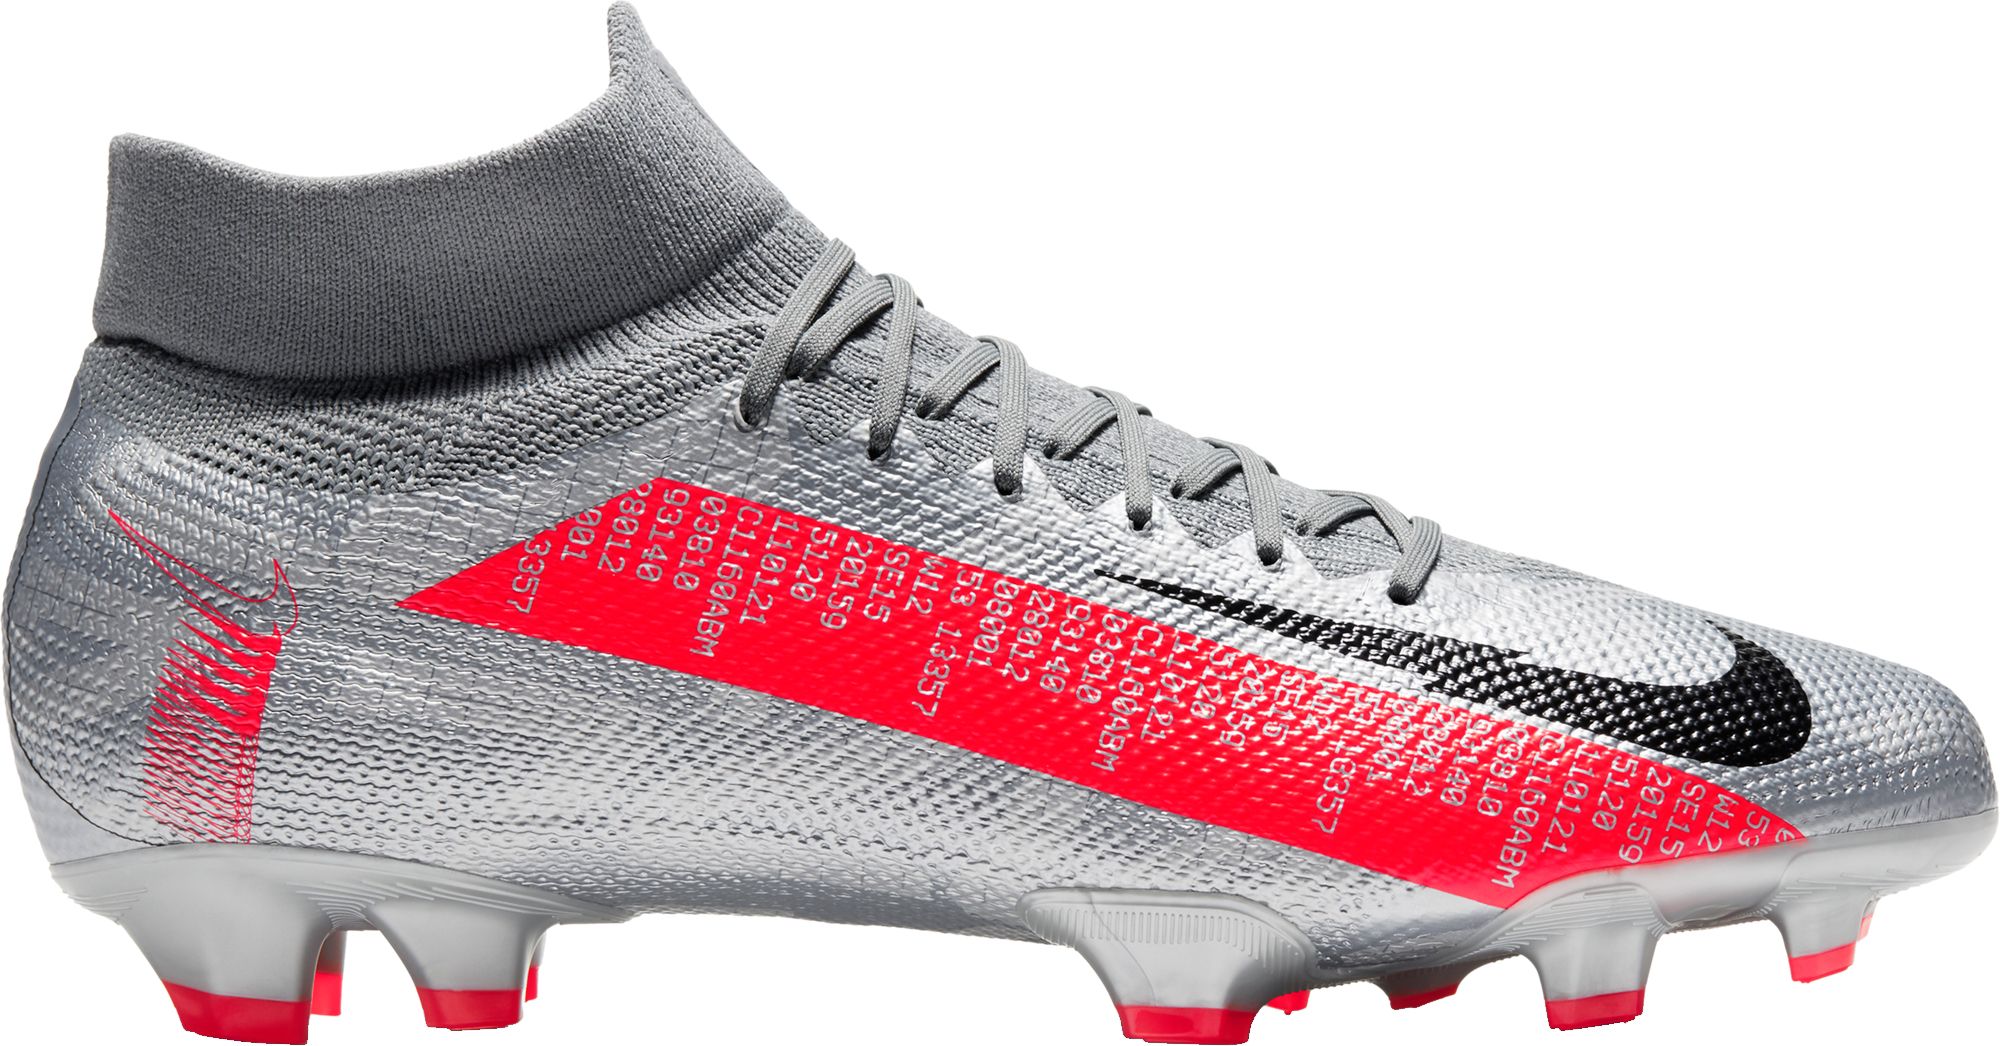 Gray Nike Mercurial Soccer Cleats 